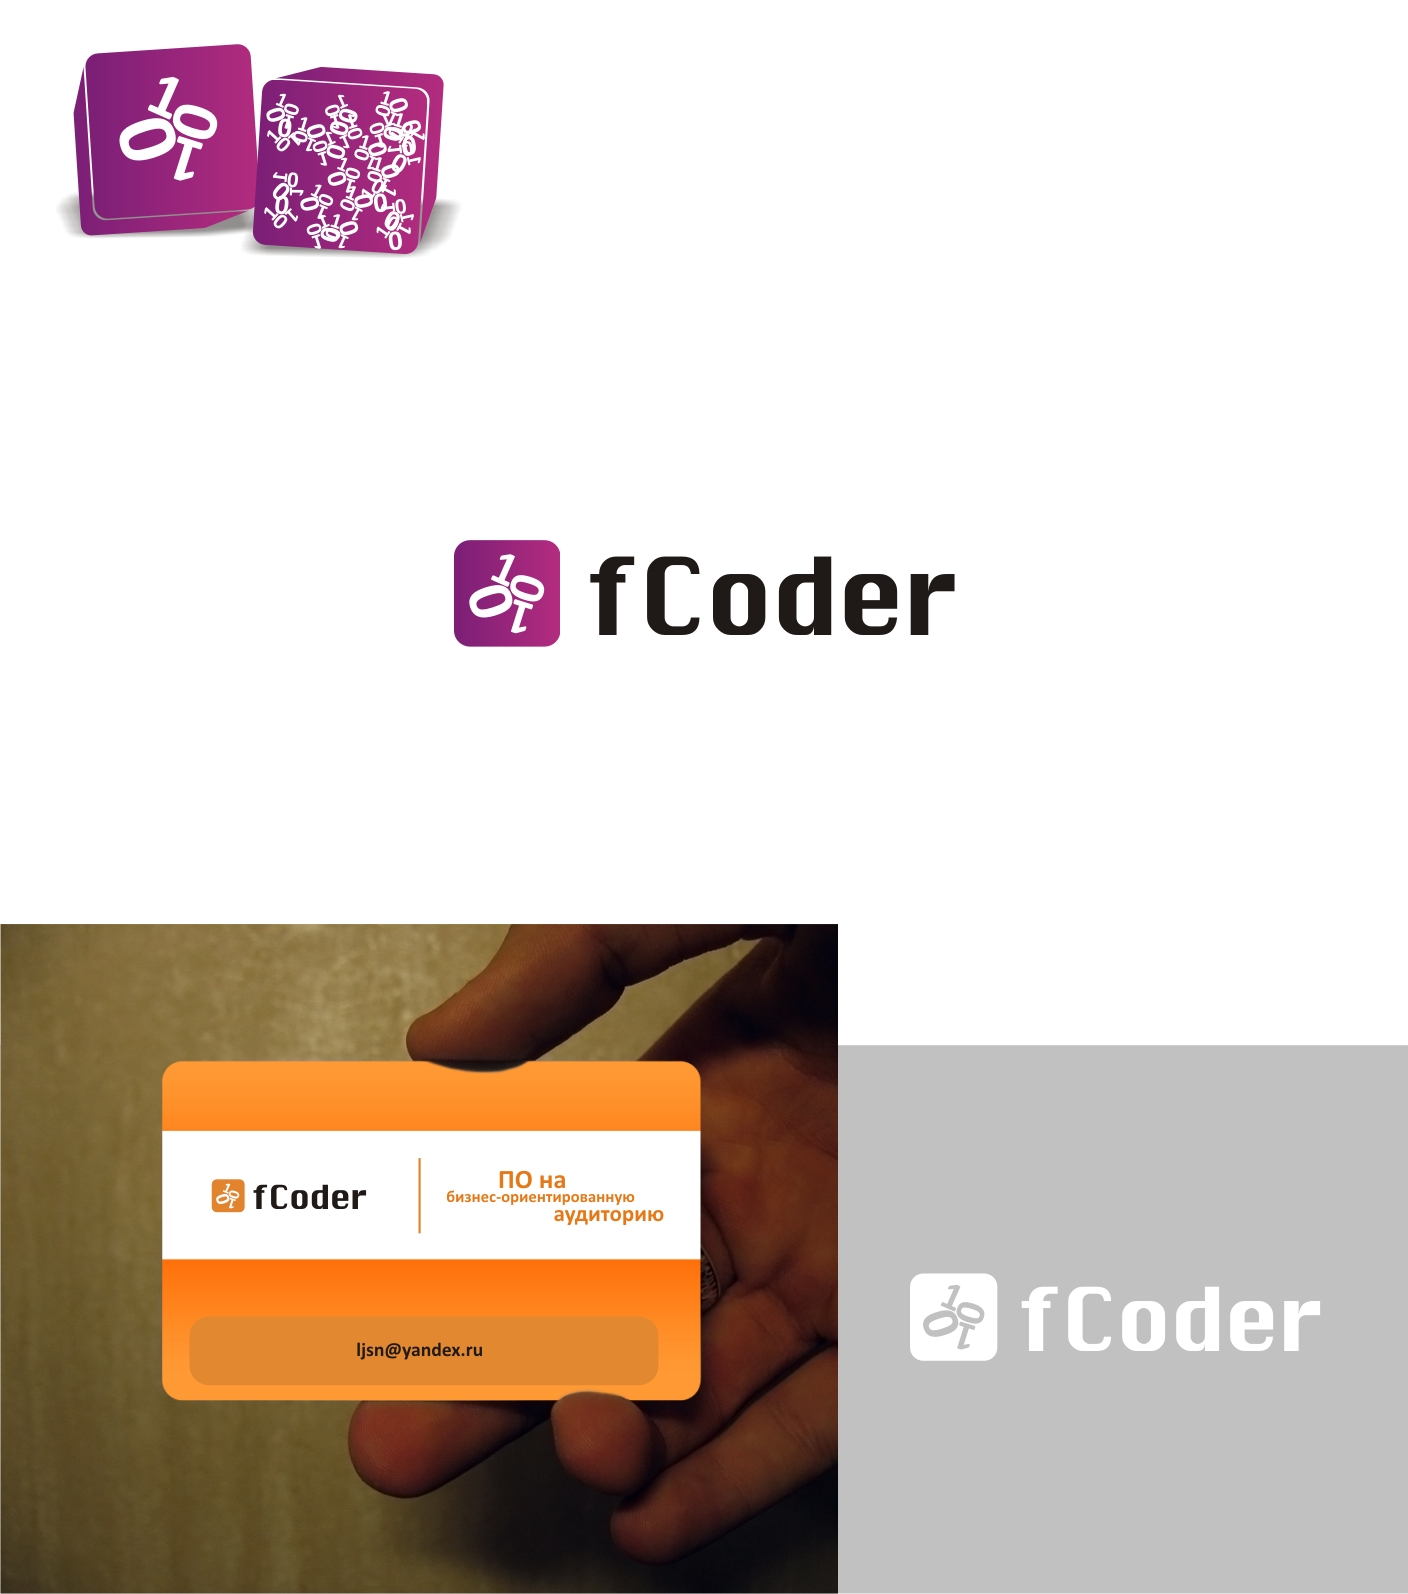 fCoder